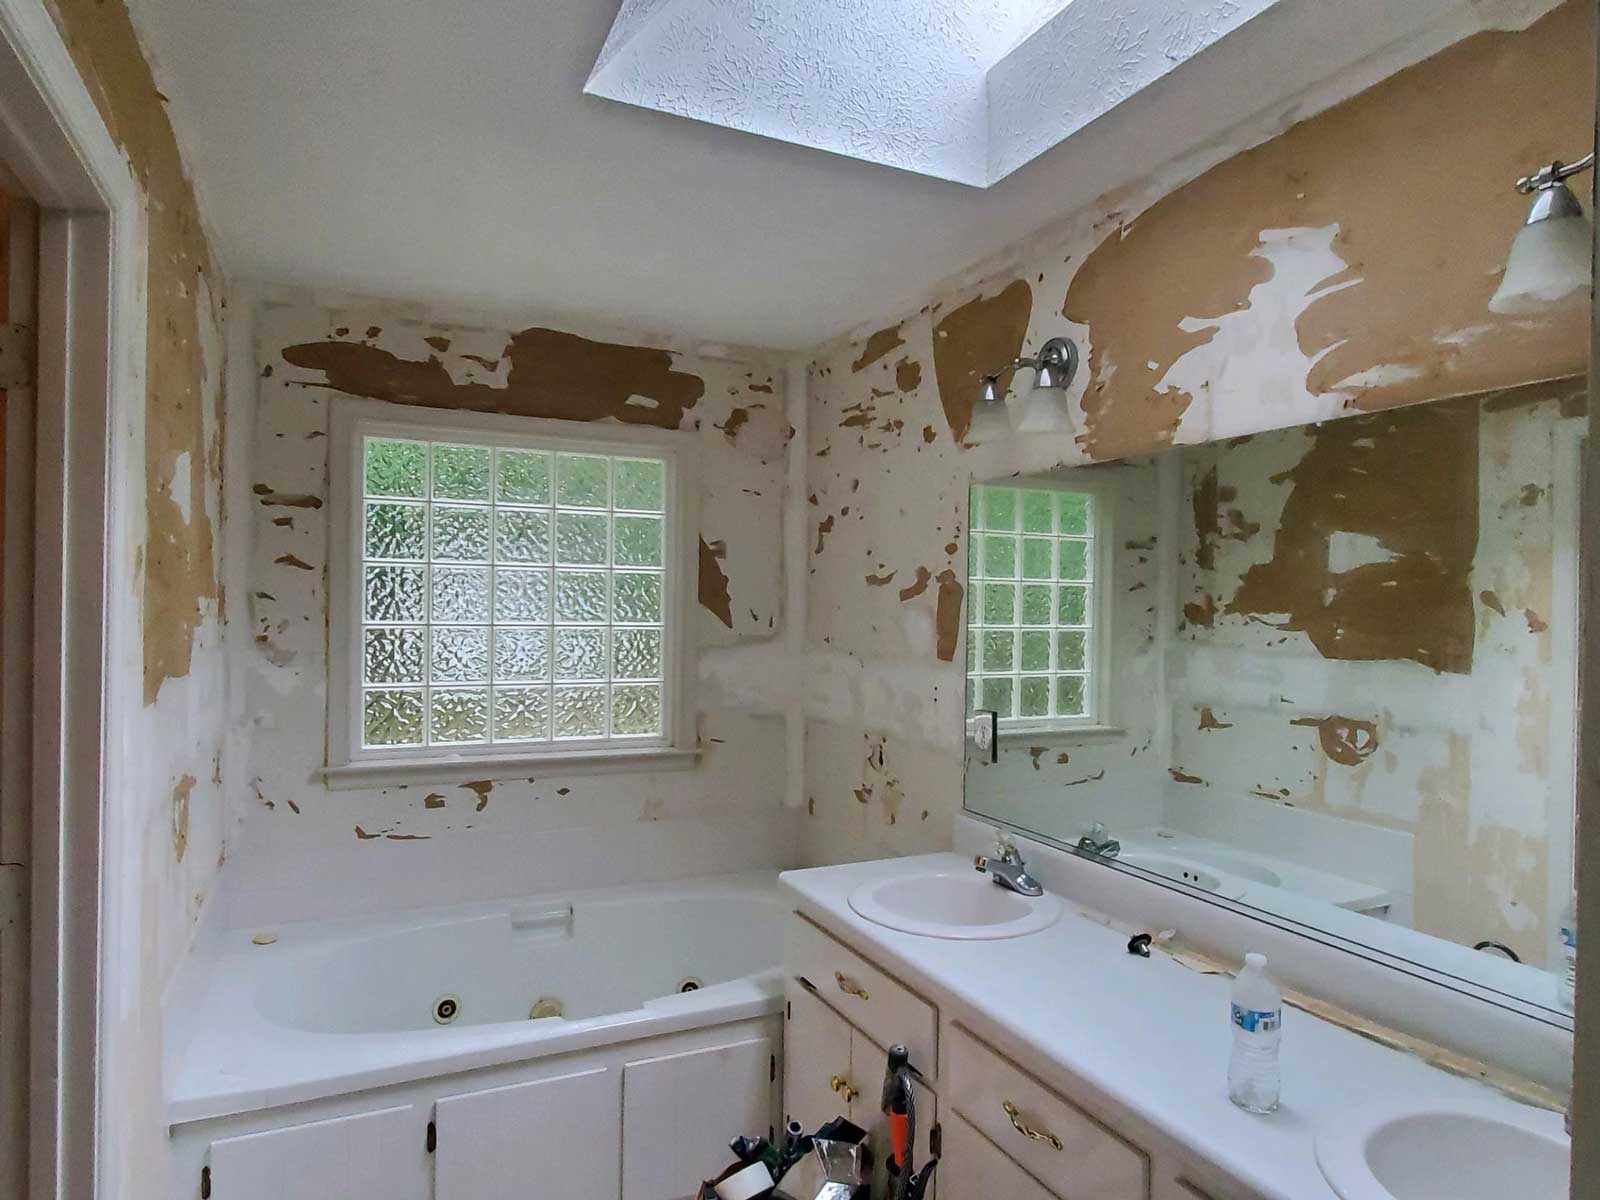 Wallpaper removal service in Richmond VA bathroom 